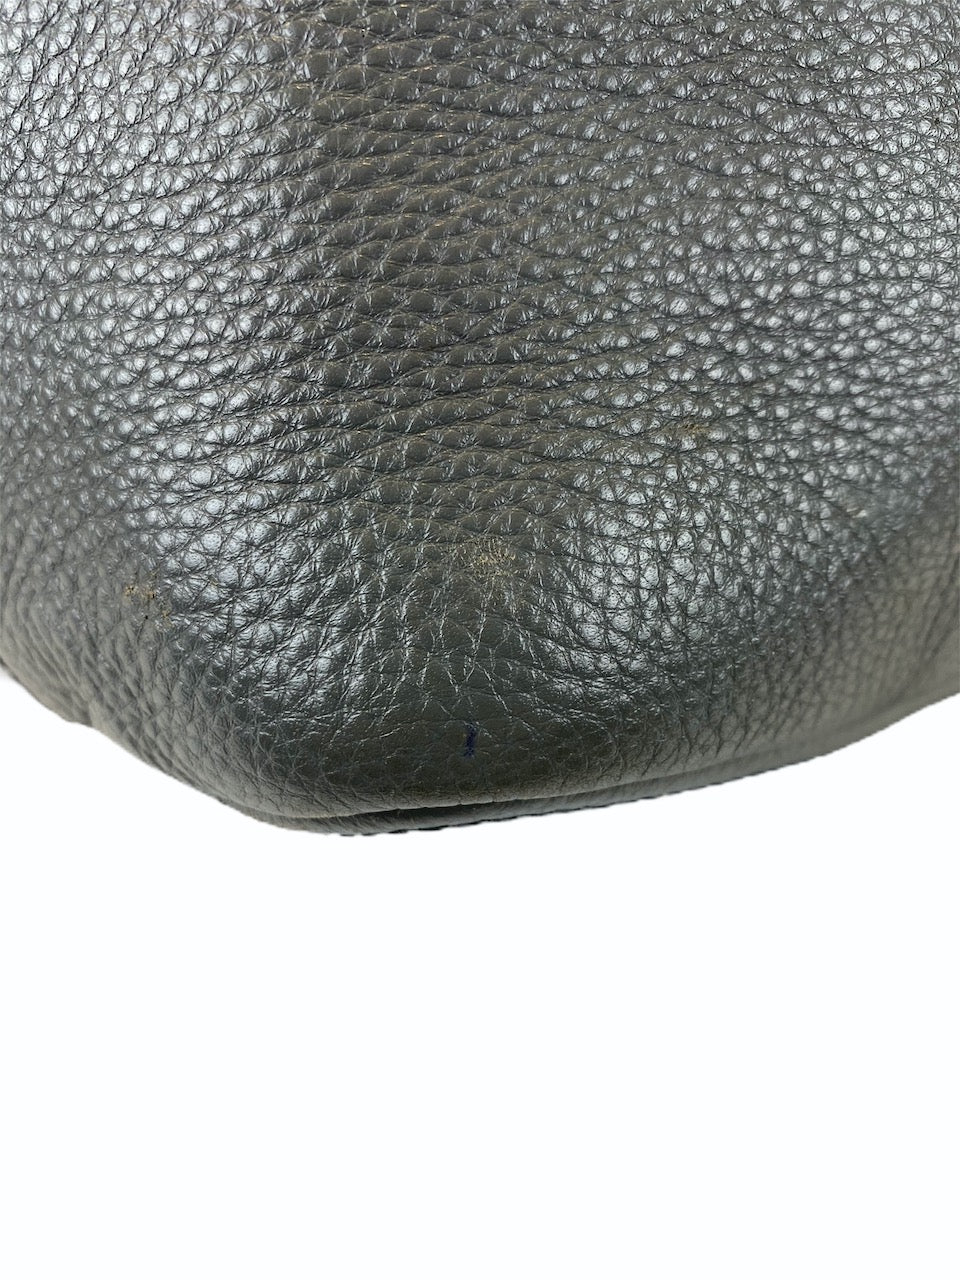 Prada Grey Leather Hobo - As Seen on Instagram 2/9/20 - Siopaella Designer Exchange